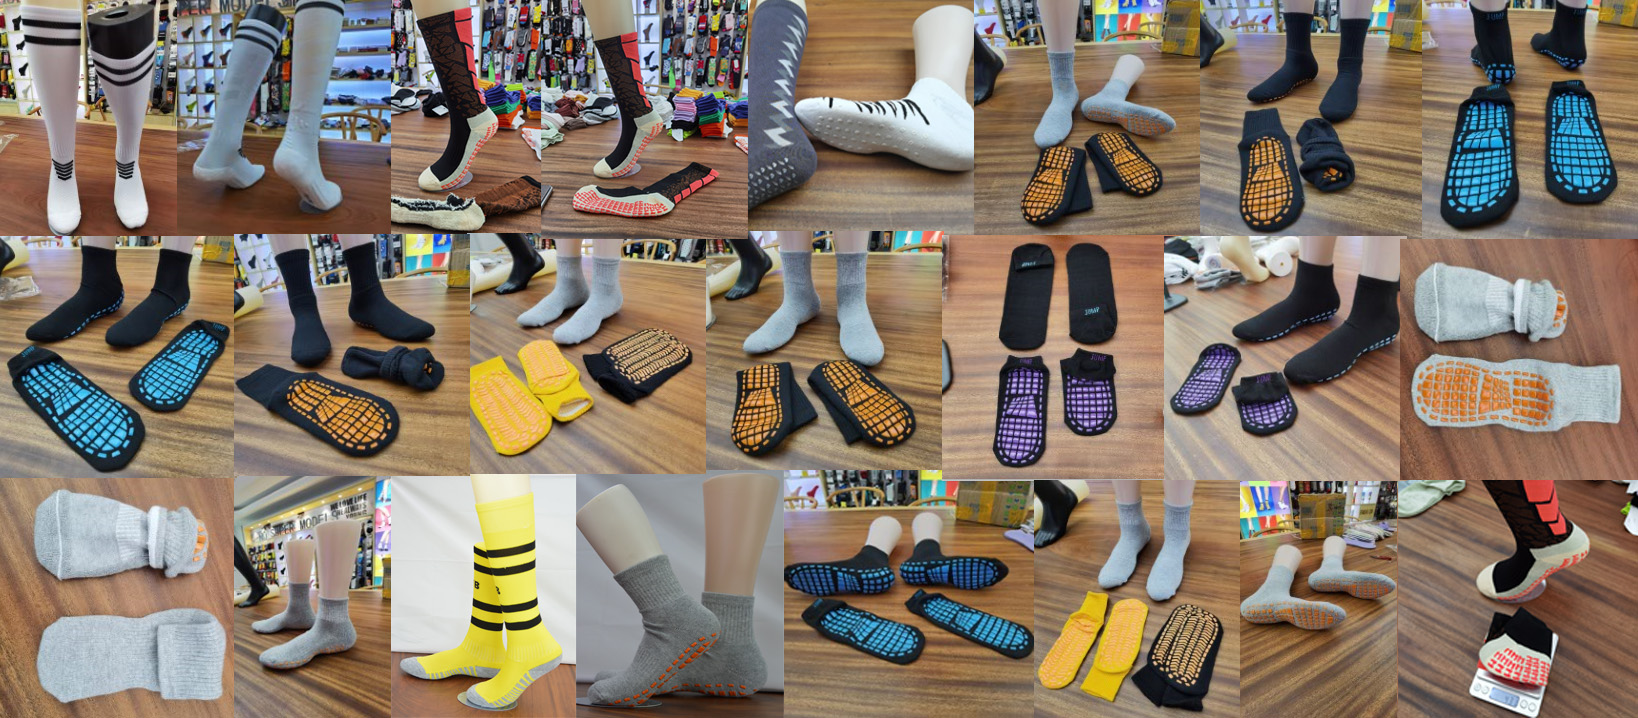 many grip socks2.jpg